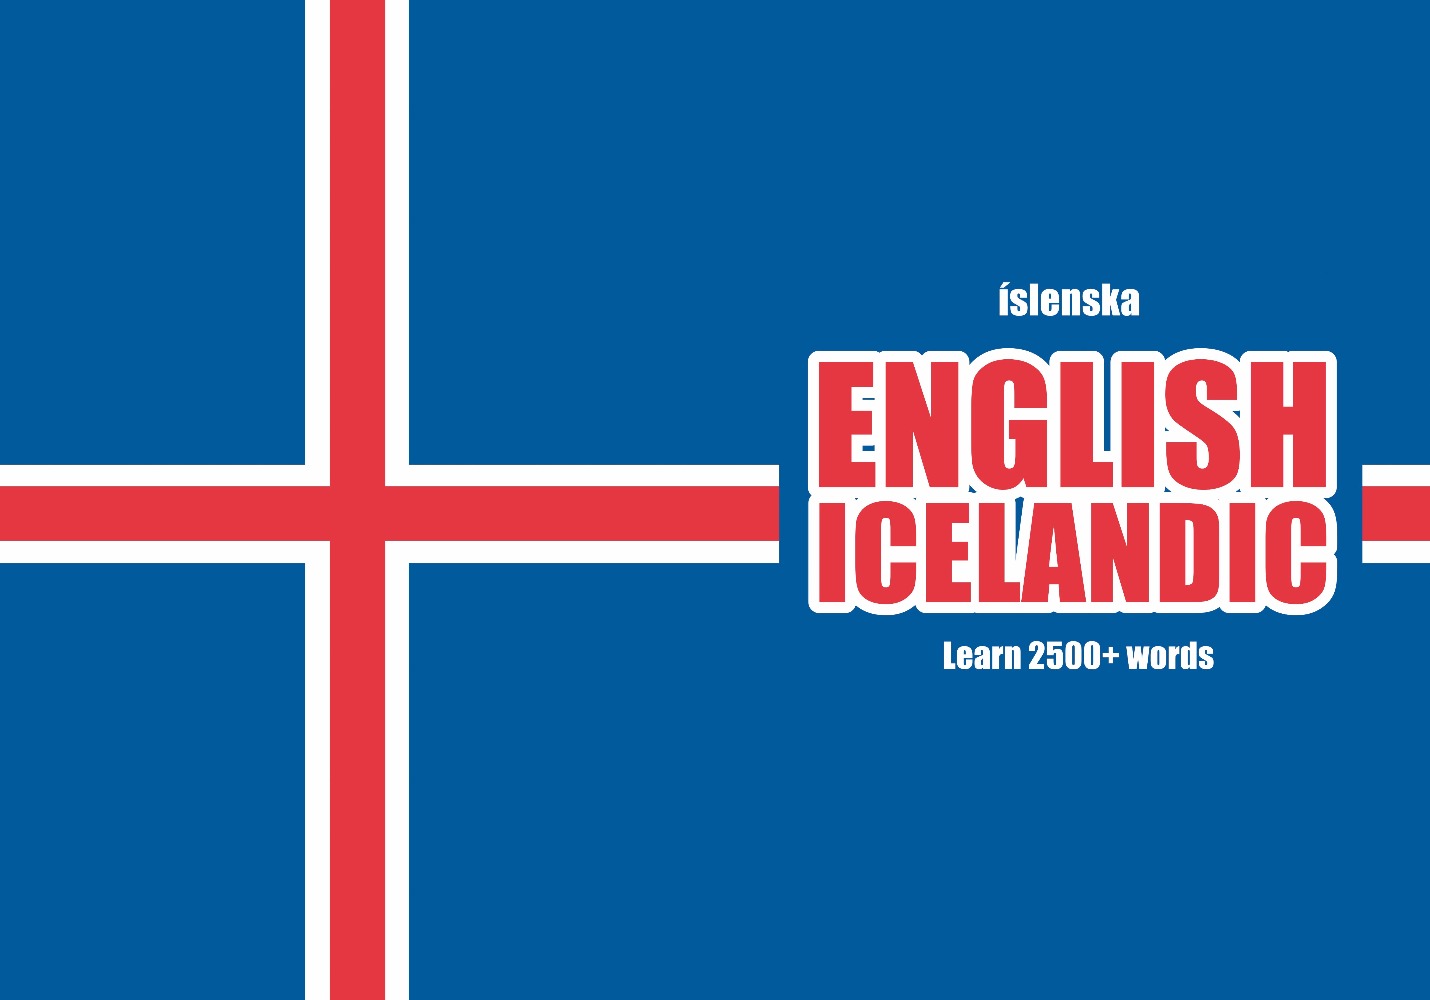 Icelandic language learning notebook cover